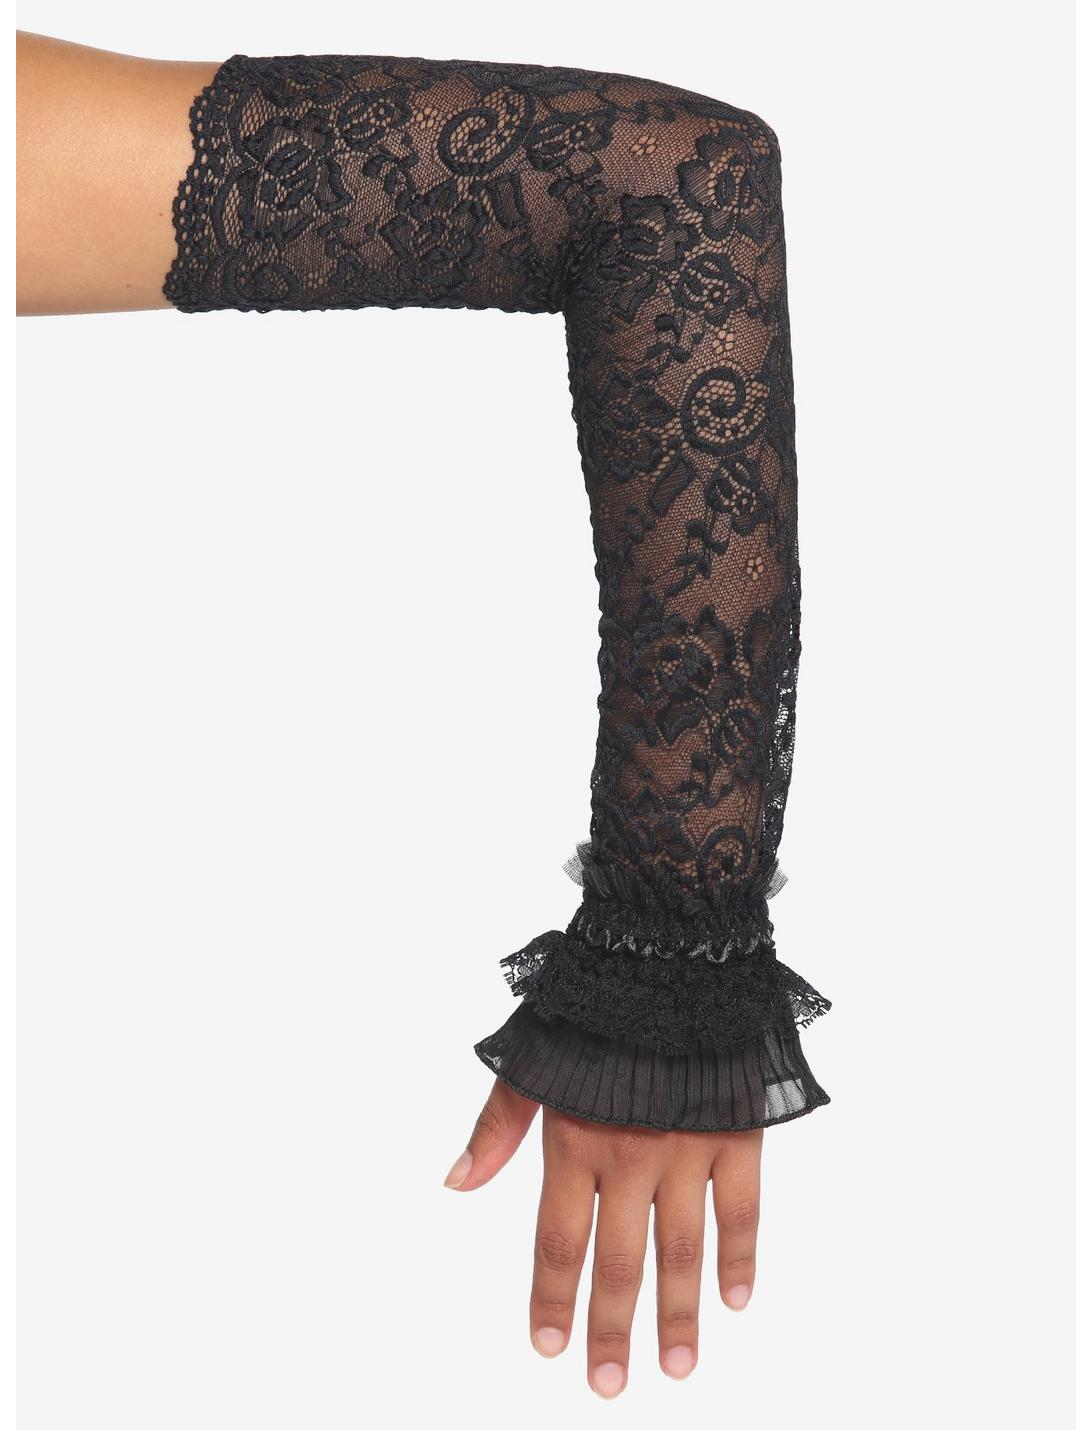 Black Lace Ruffle Gloves, , hi-res